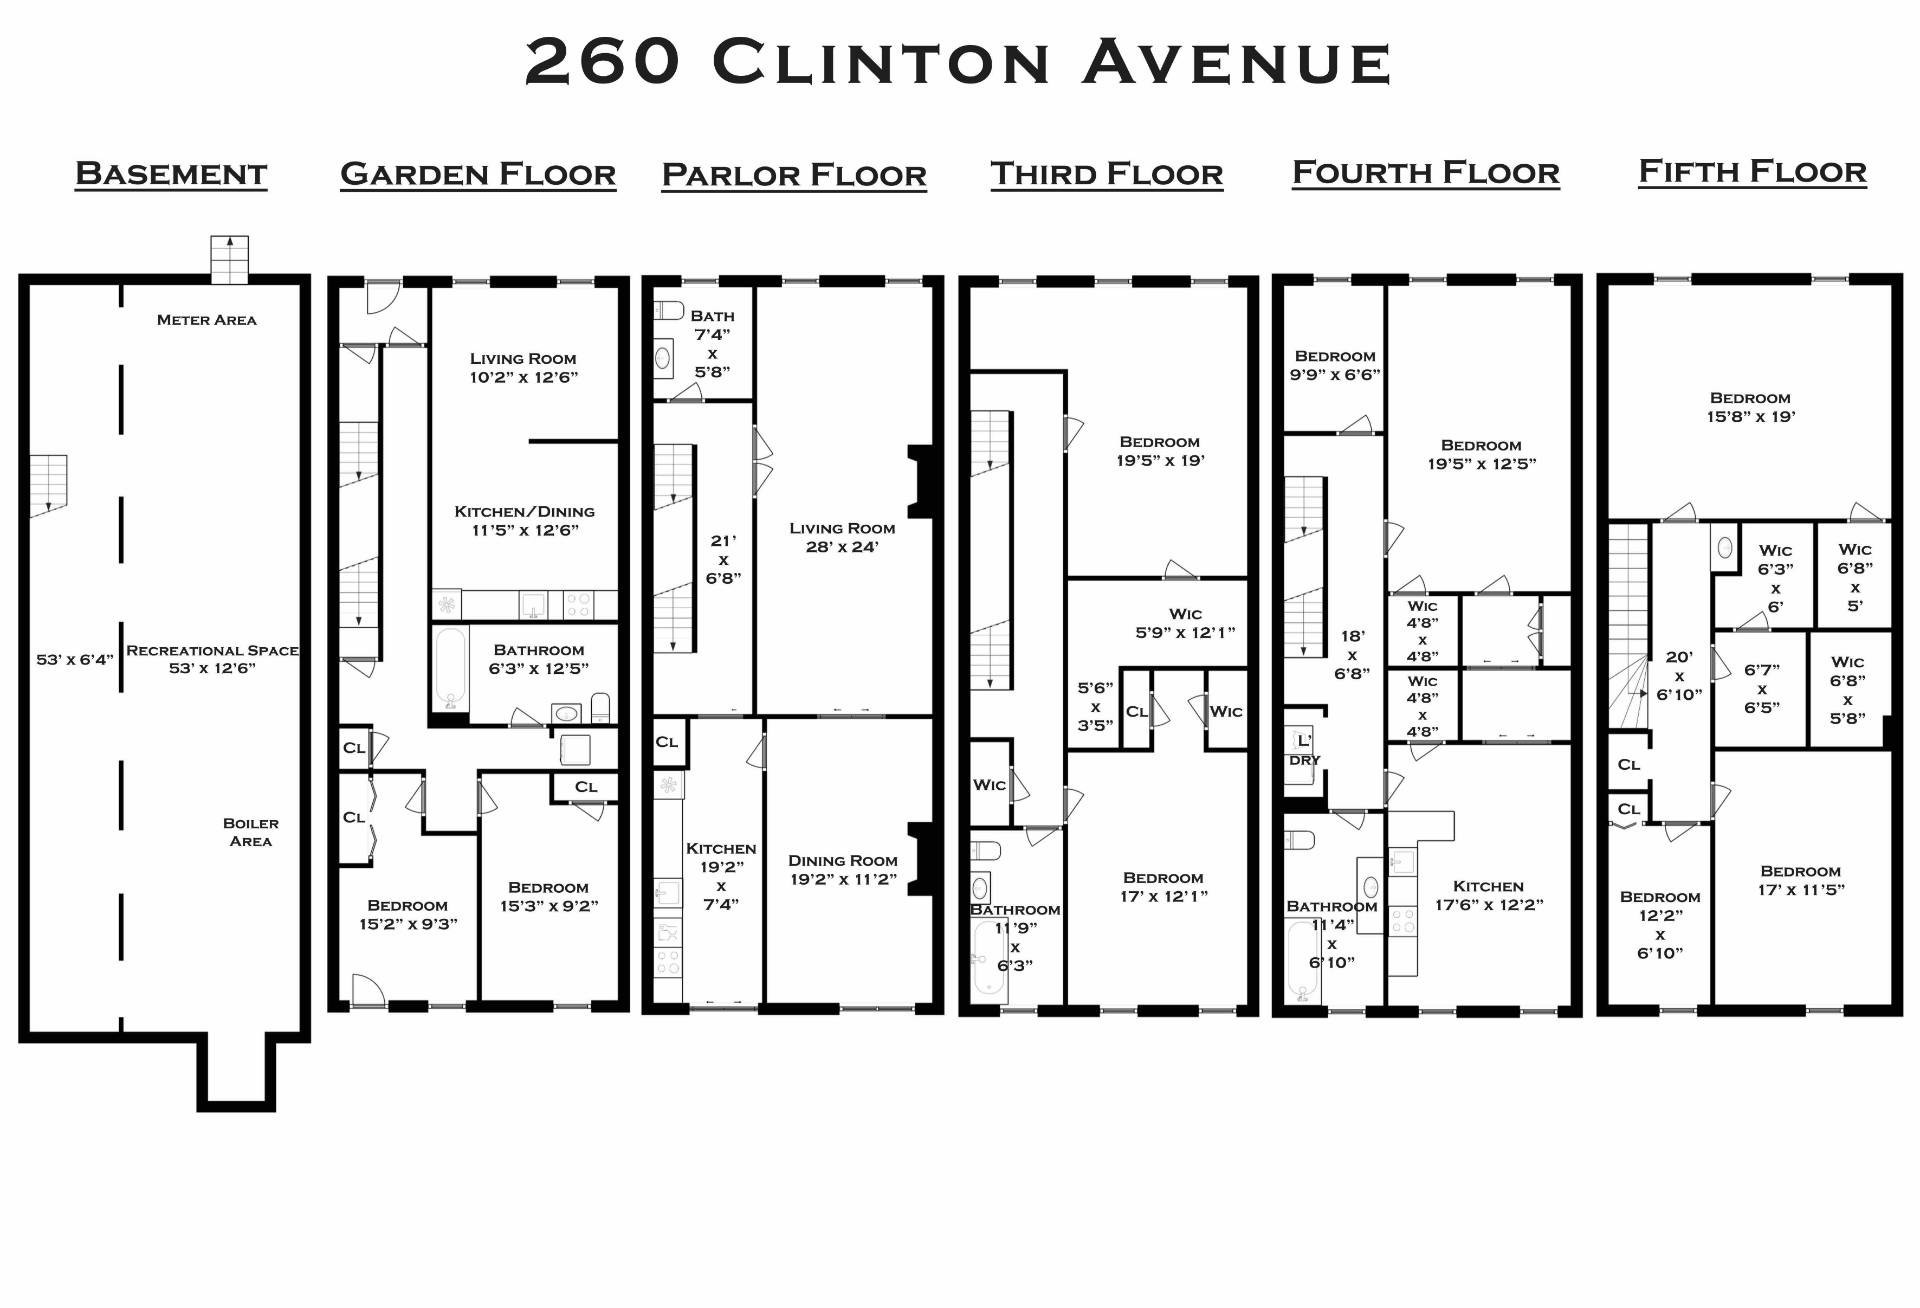 20. 260 Clinton Avenue